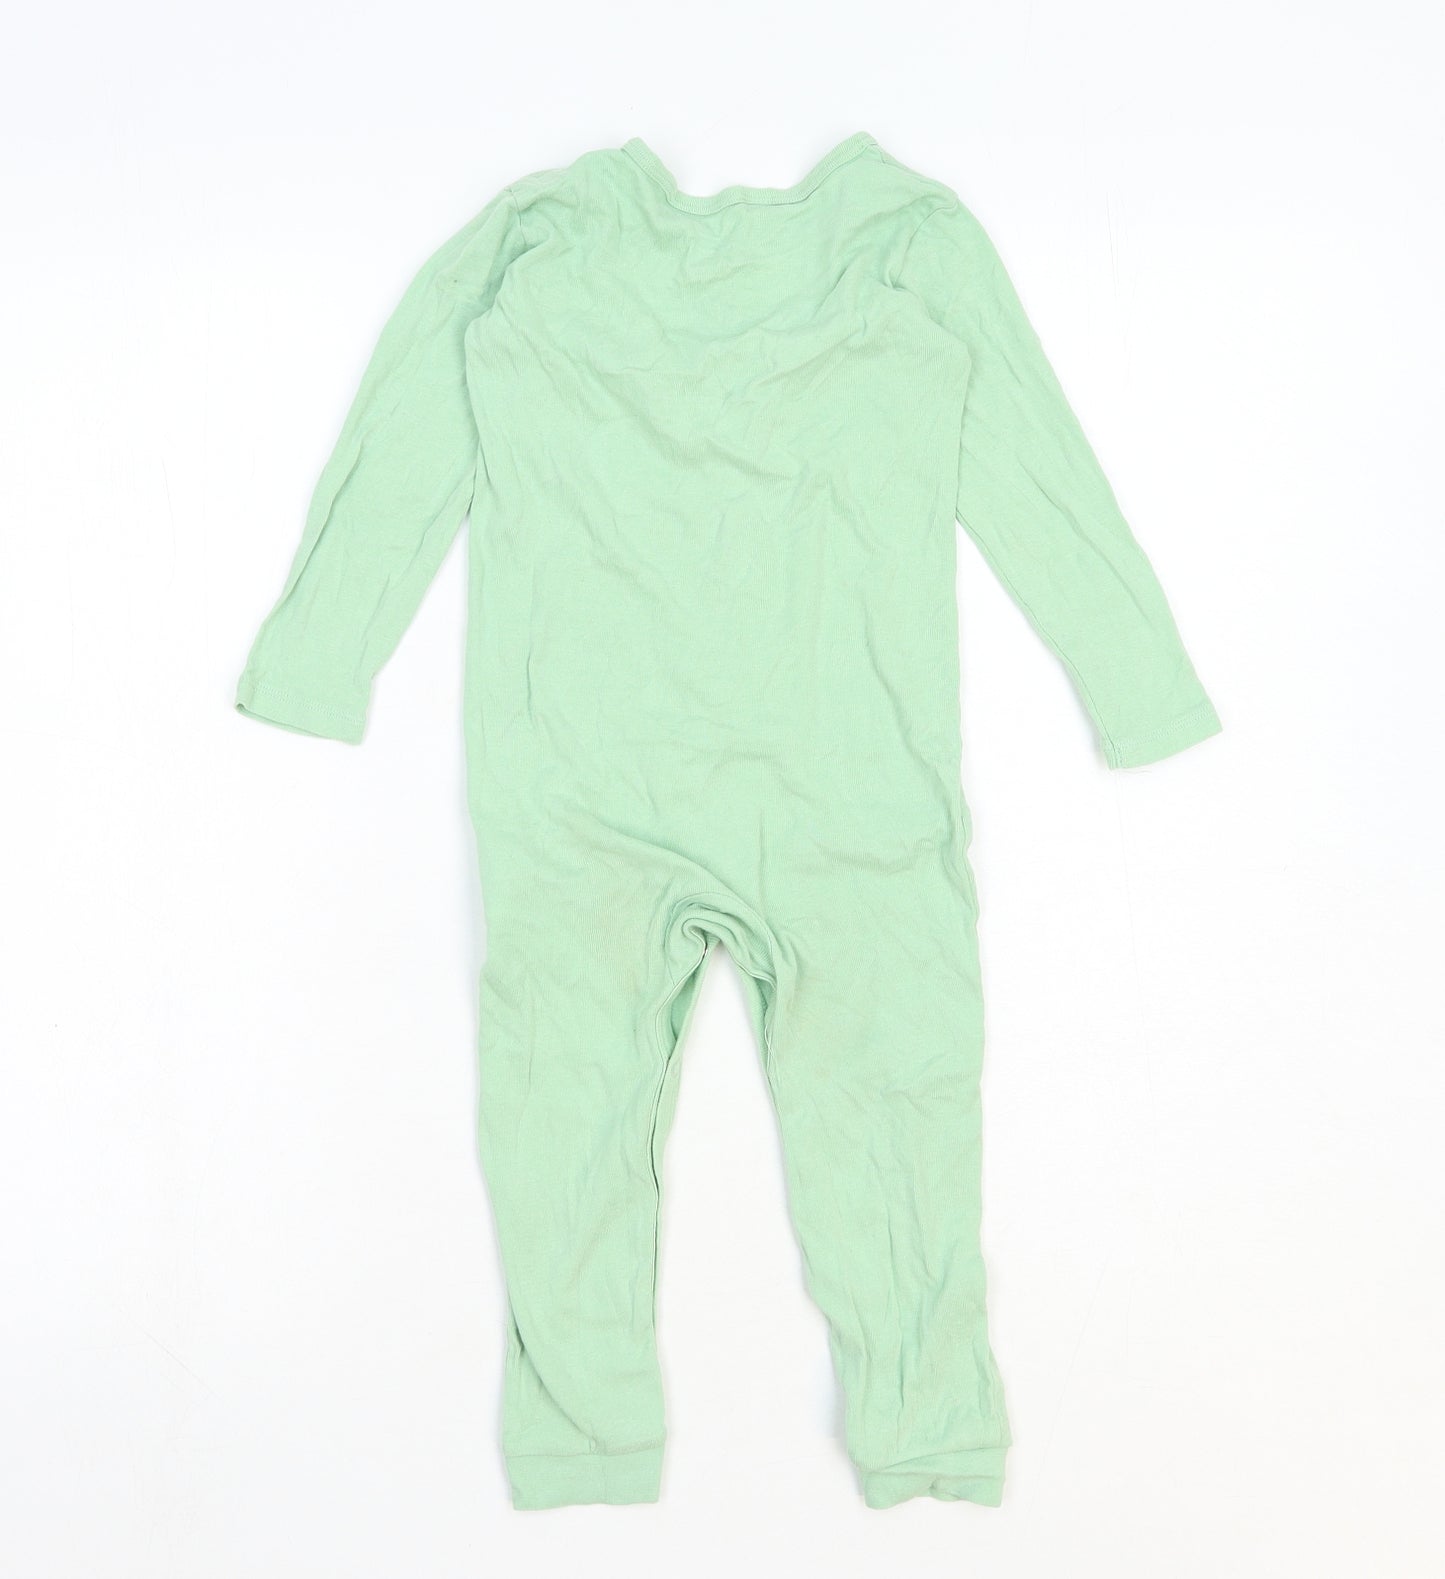 Lupilu Baby Green Cotton Babygrow One-Piece Size 18-24 Months Snap